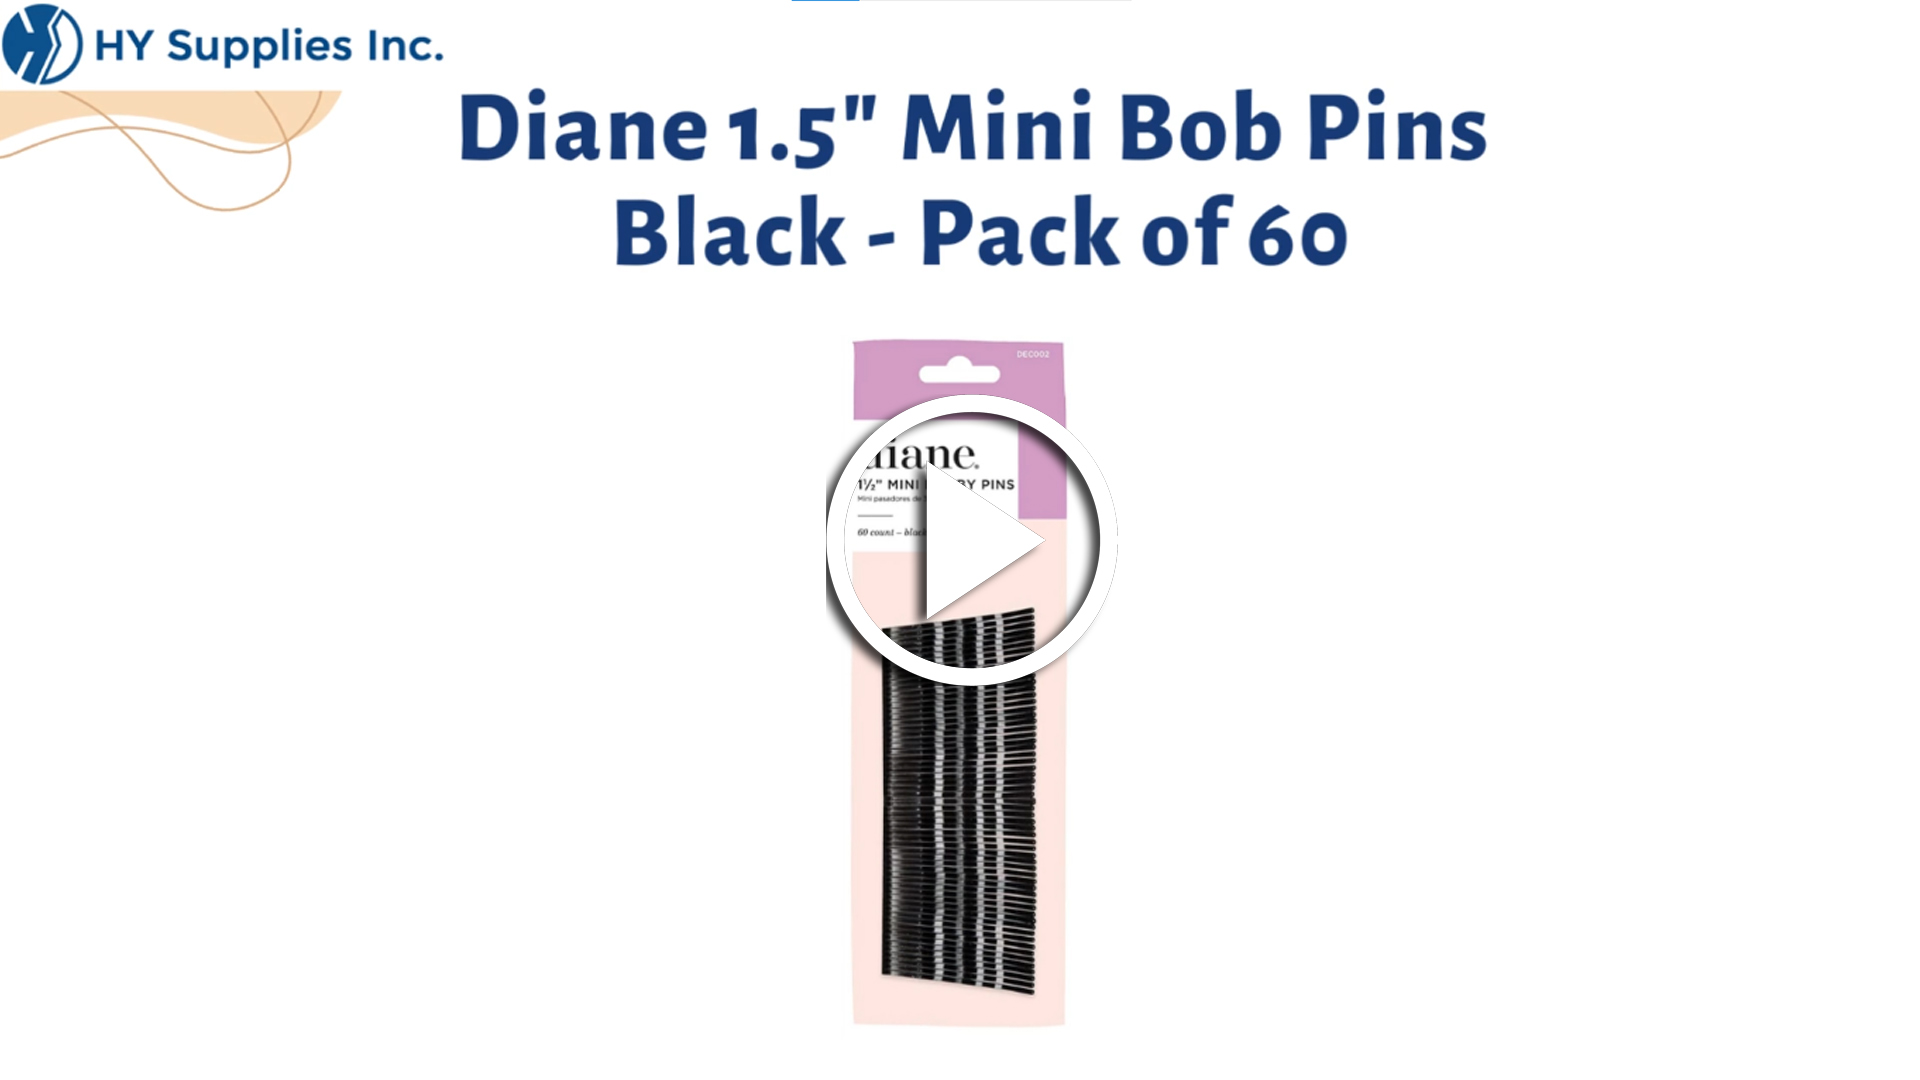 Diane 1.5" Mini Bob Pins Black - Pack of 60